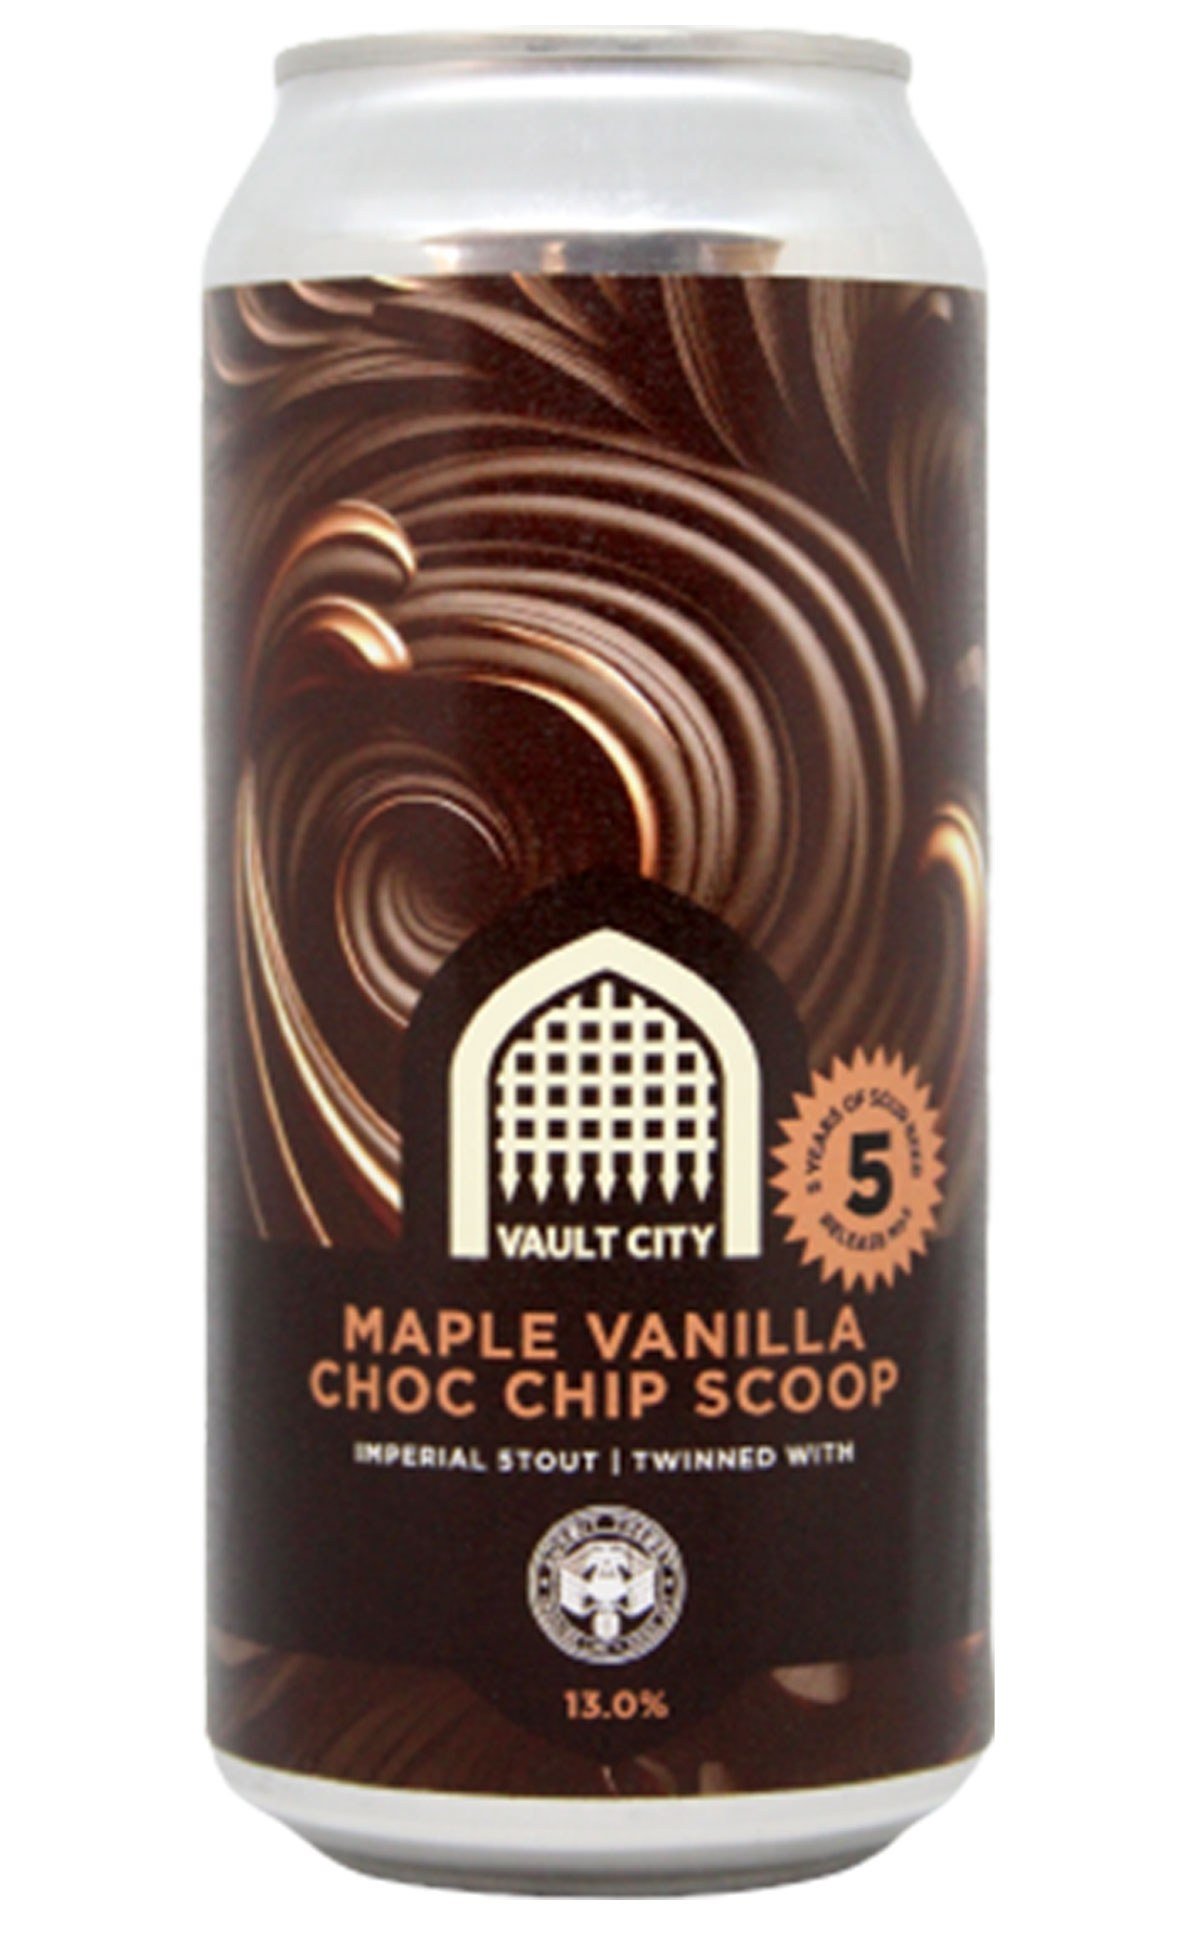 Maple Vanilla Choc Chip Scoop Imperial Stout